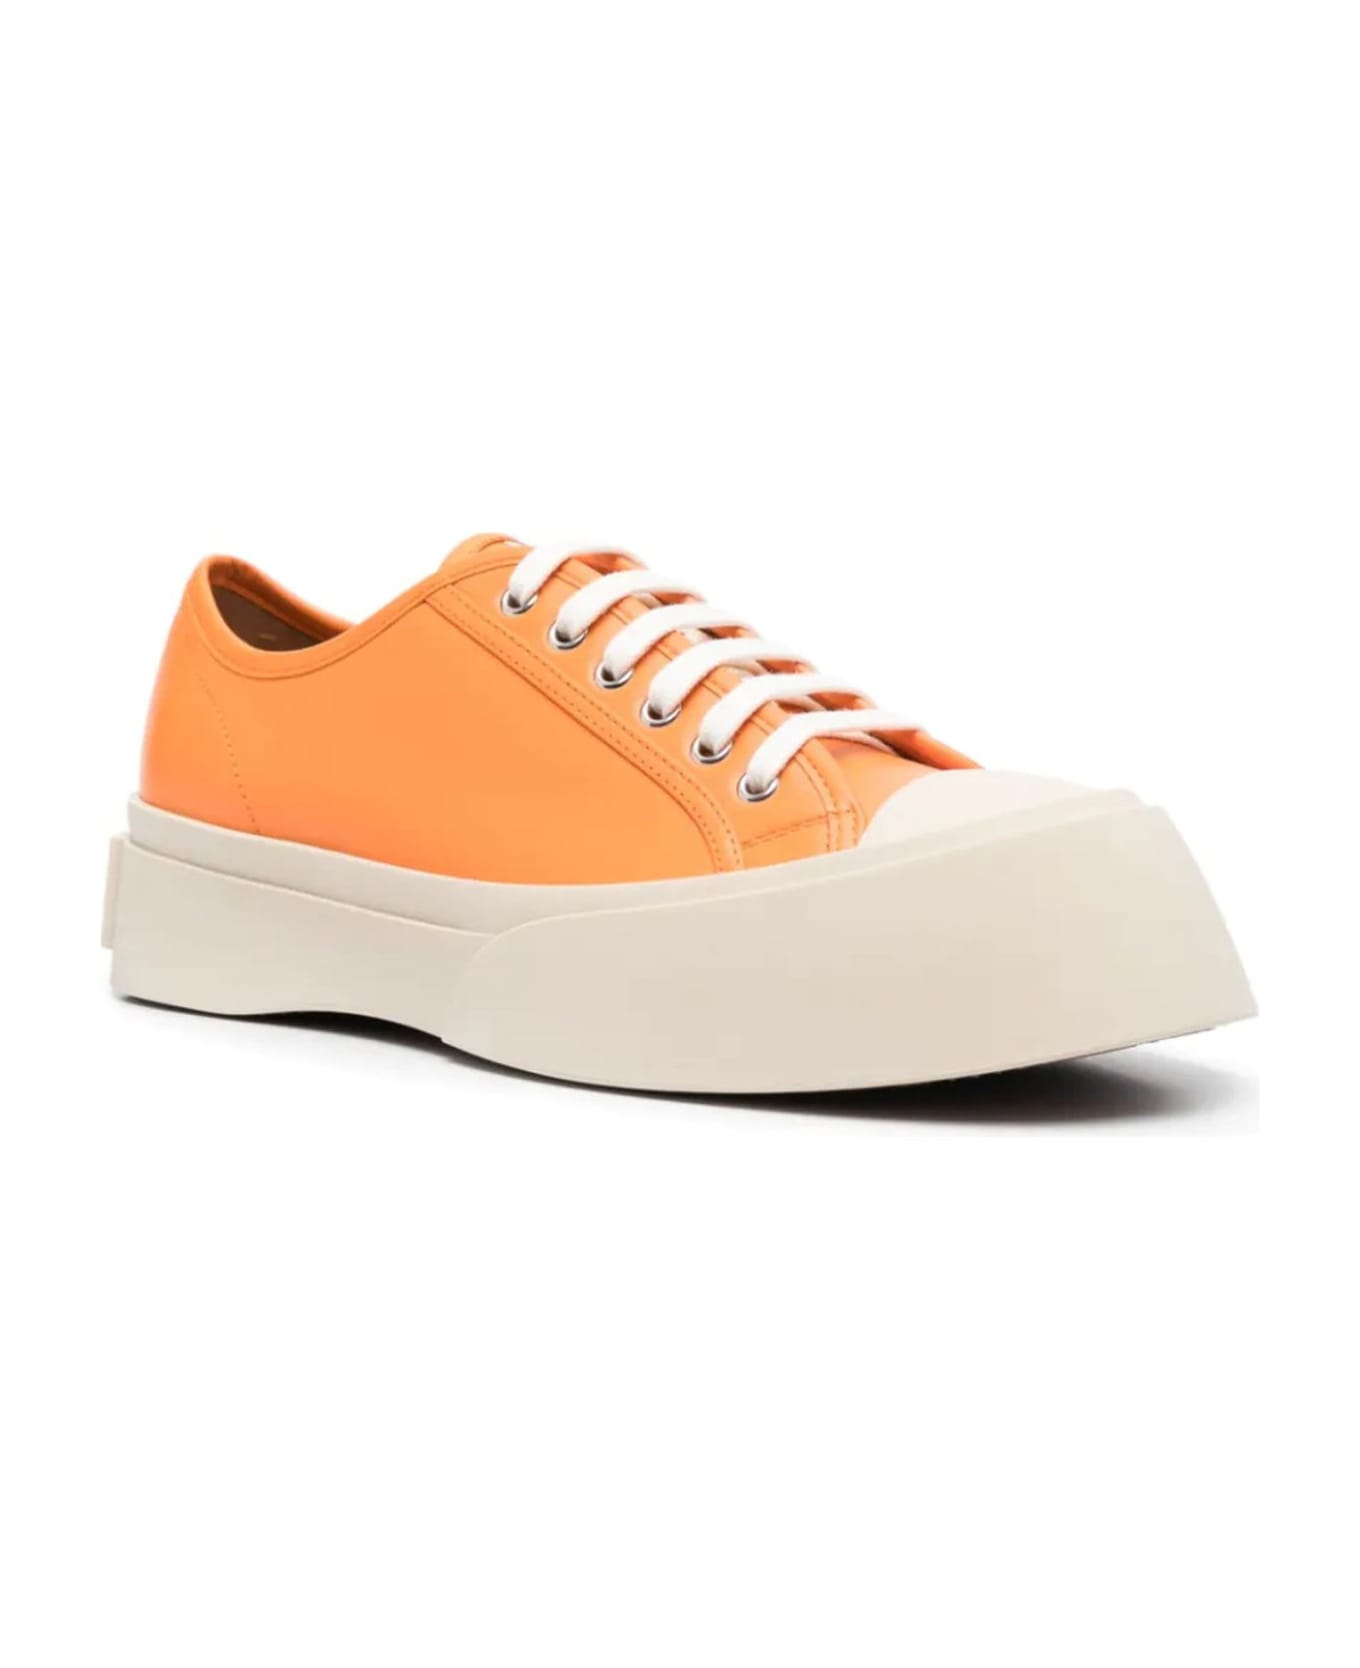 Marni Orange Soft Calf Leather Pablo Sneaker - Orange